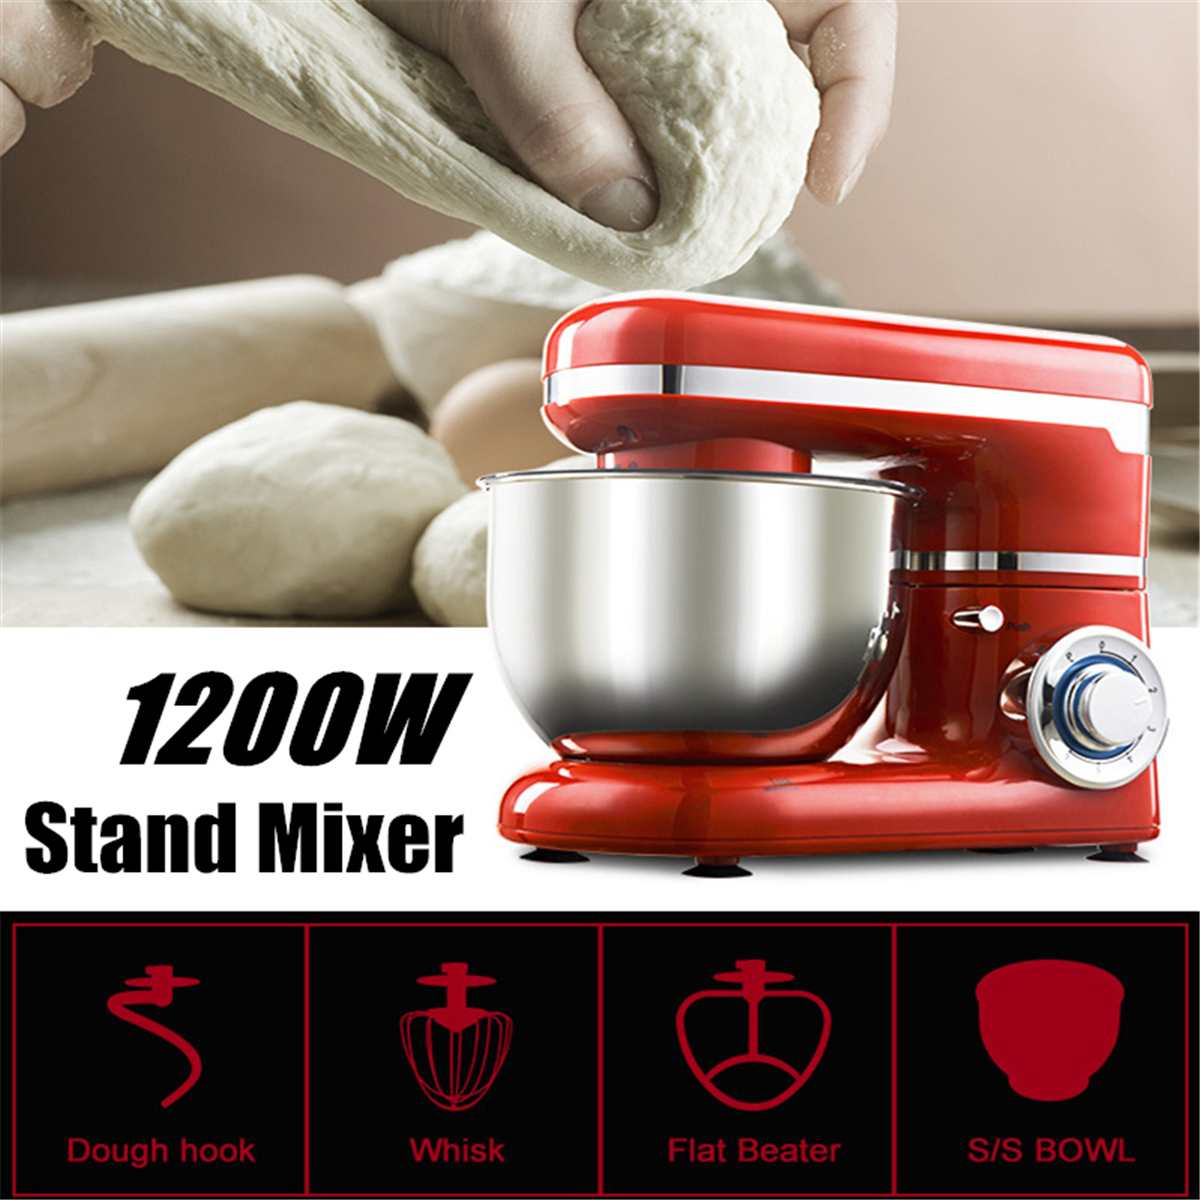 1200W 4L Stainless Steel Bowl Mixer Kitchen Blenders Mixer Cream Eggs Whisk Cake Dough Maker Bread Mixer Machine Food Processor